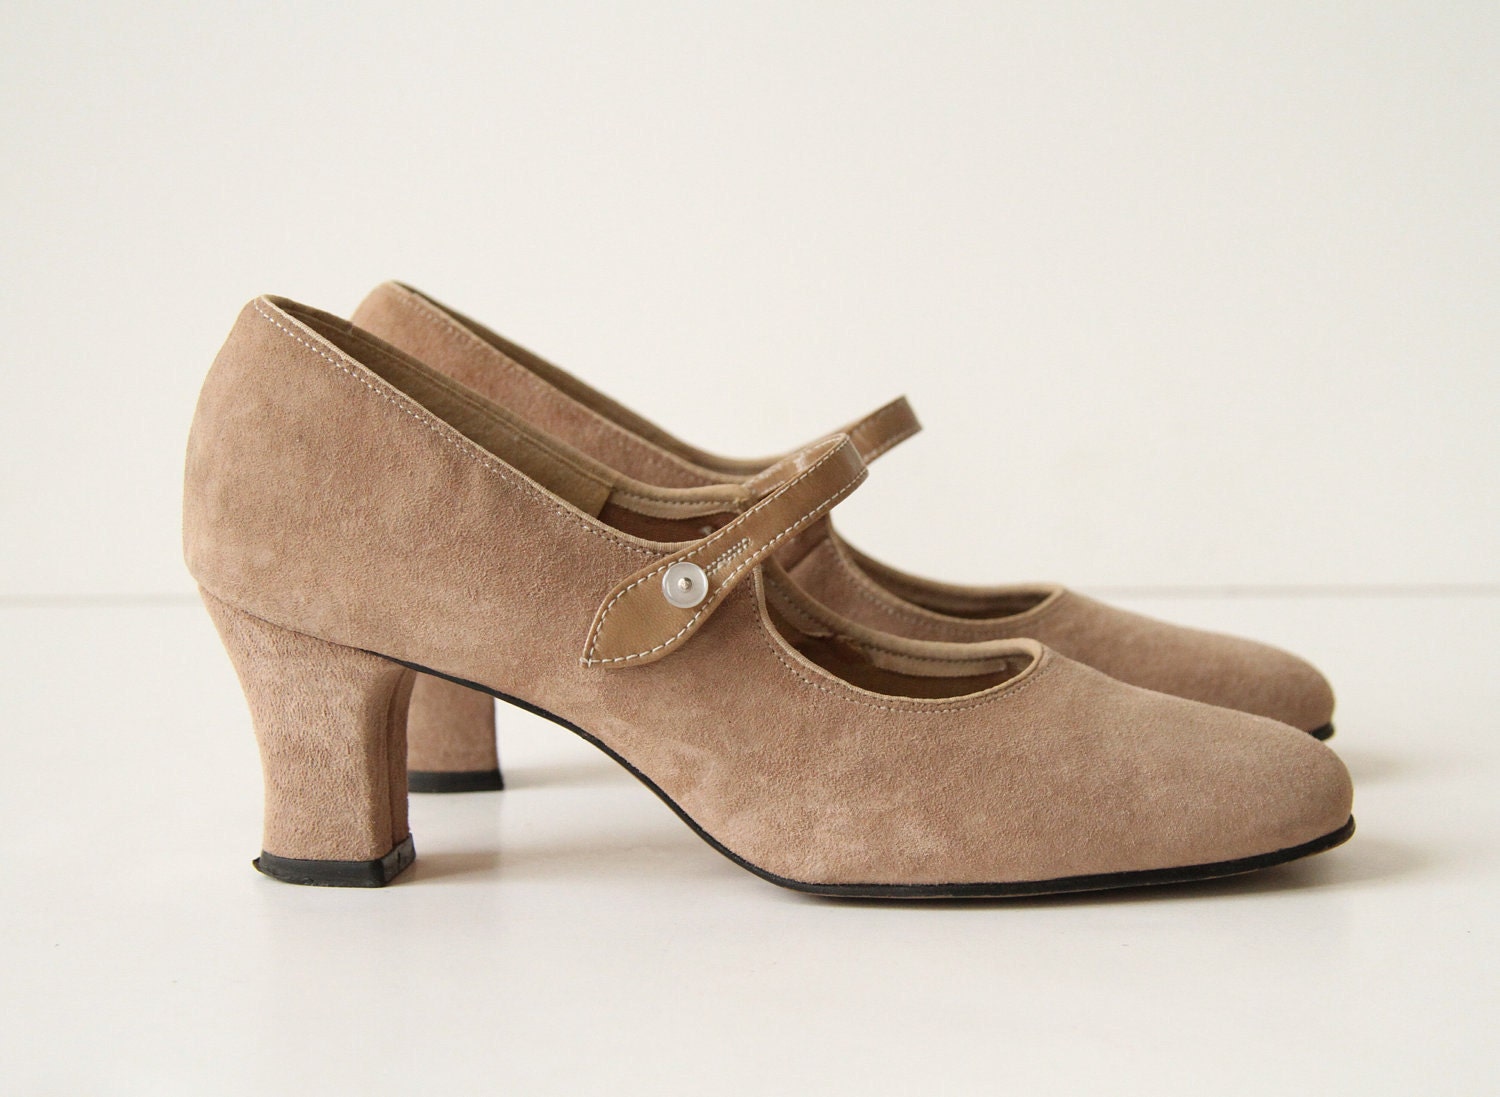 Vintage Suede Maryjanes - Birch Tan Suede - 60s Mod Shoes - nbdg